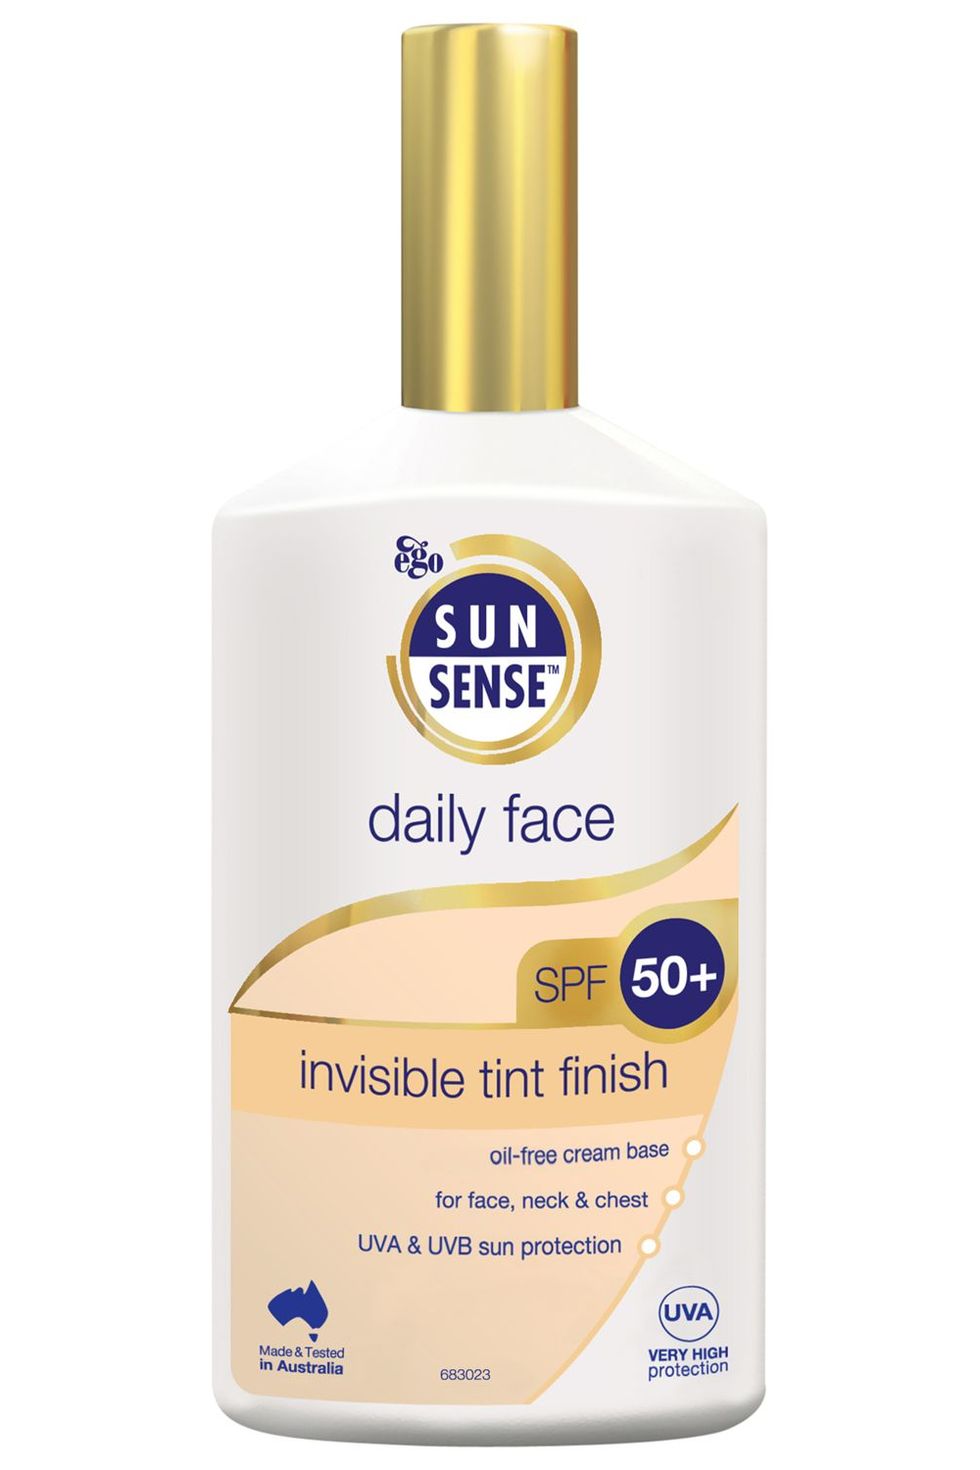 Sunsense Daily Face Invisible Tint Finish SPF 50+ Sunscreen